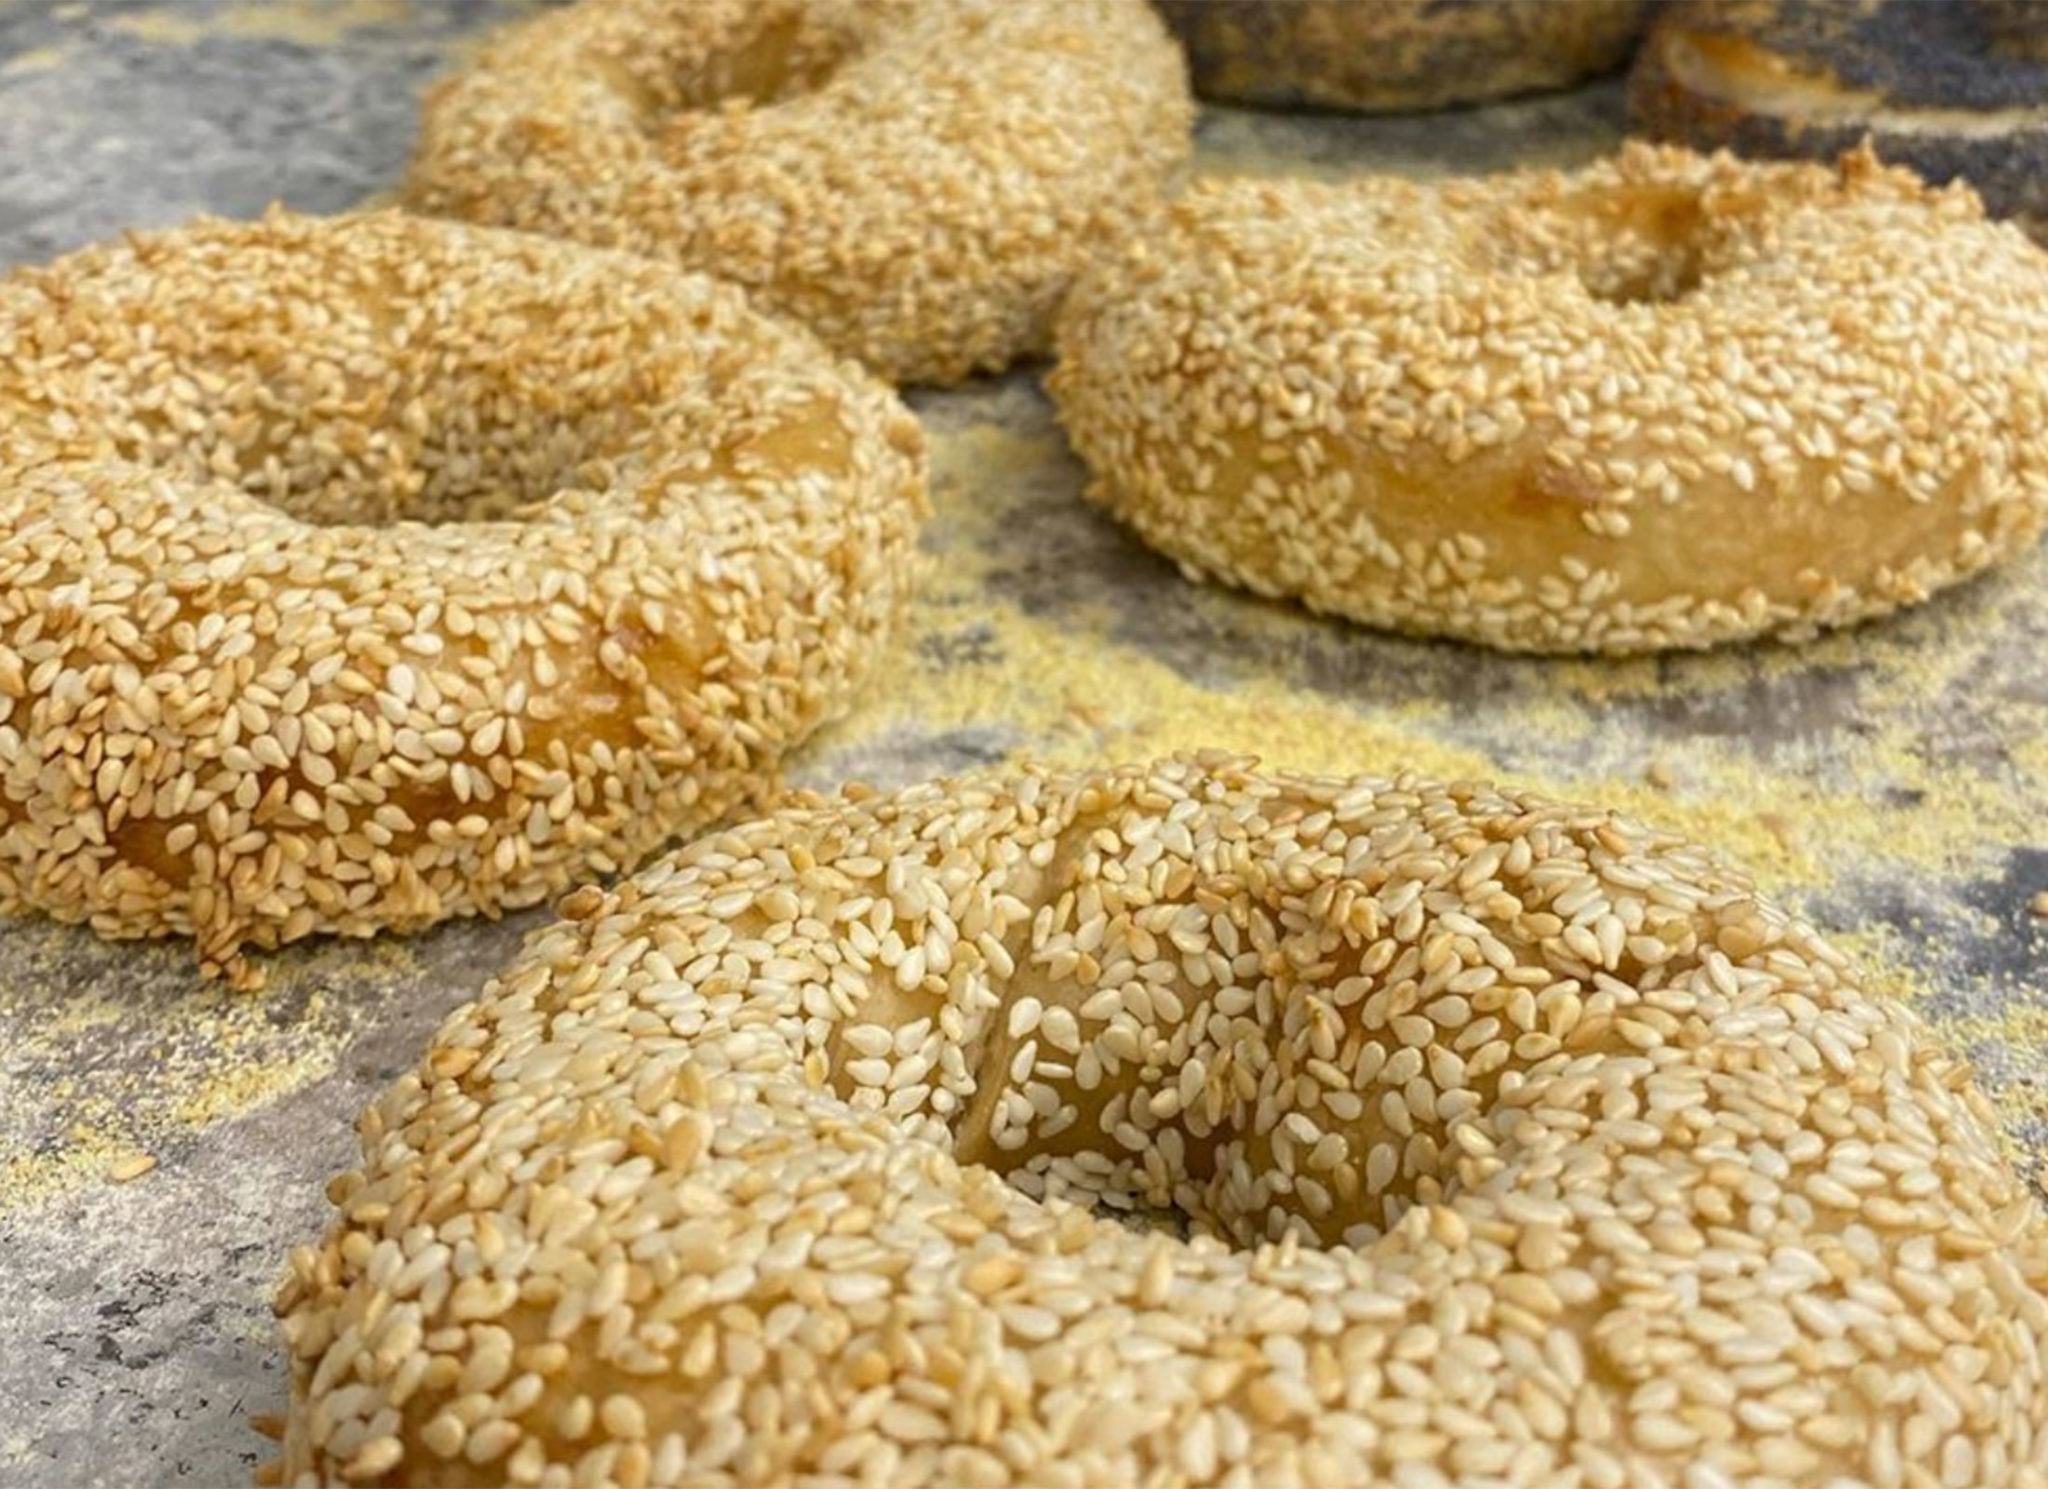 Bagel test batch for Grossman's. Photo: @sandwichcrusher Instagram 